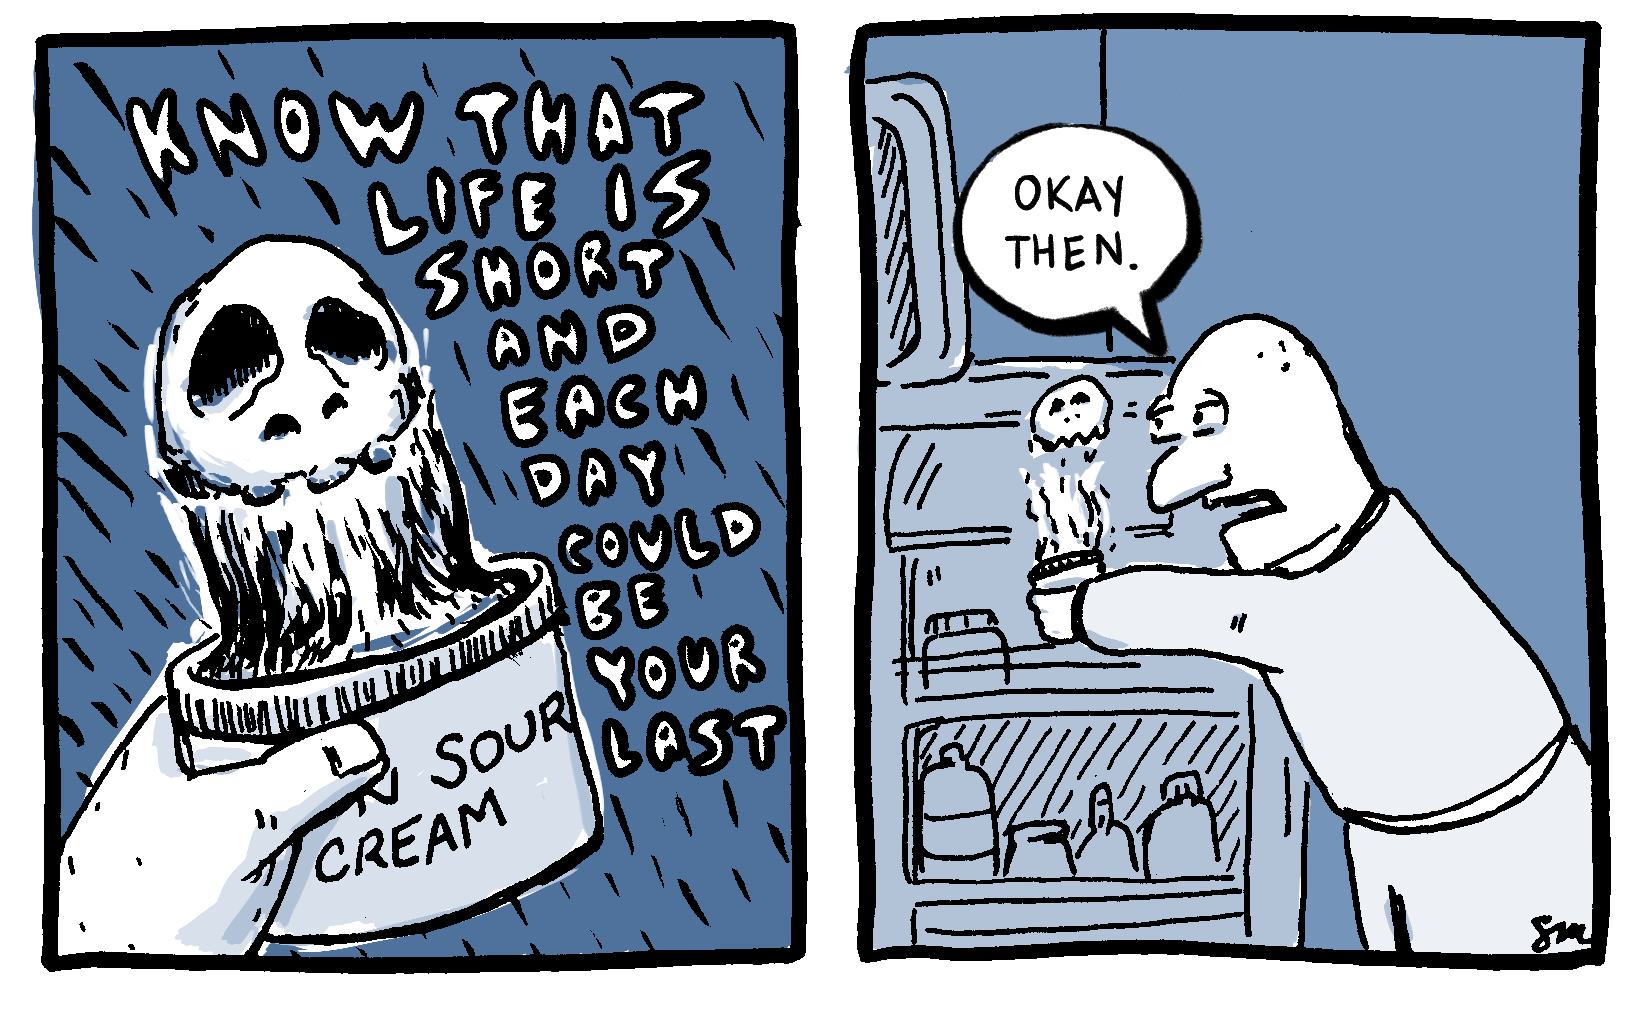 A comic in which a sour cream carton gives dark advice.